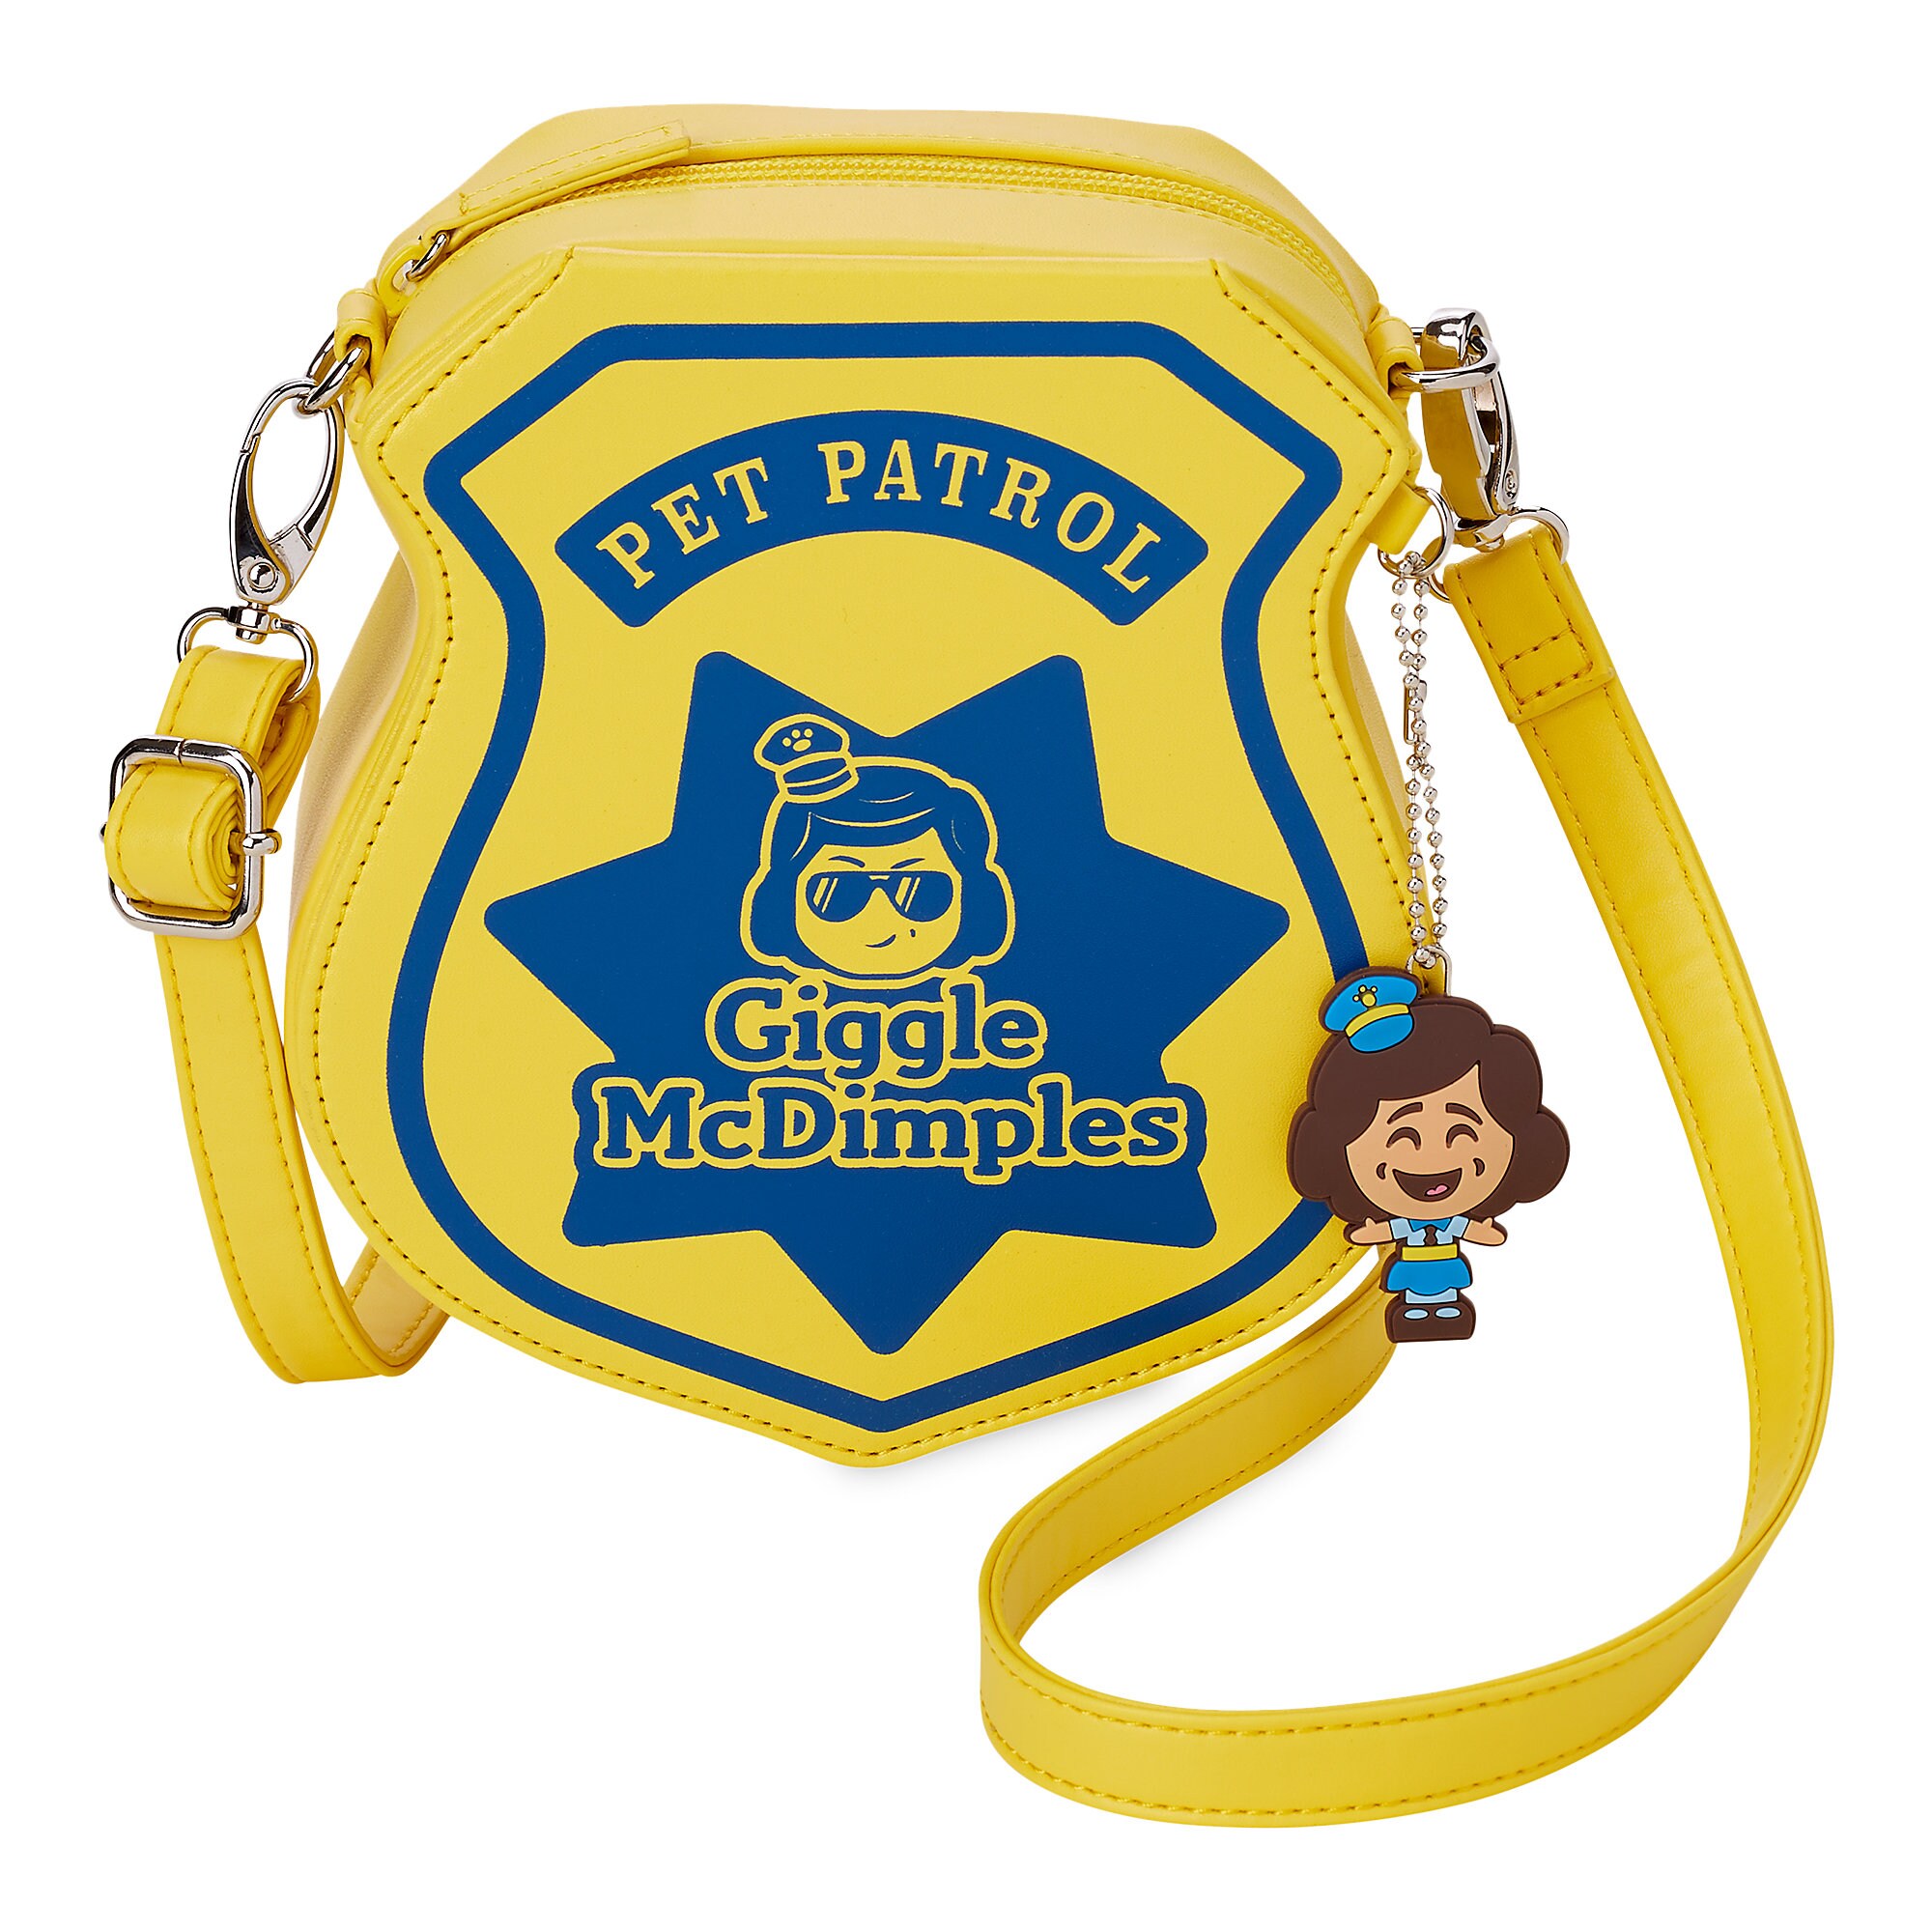 Giggle McDimples Pet Patrol Crossbody Bag - Toy Story 4